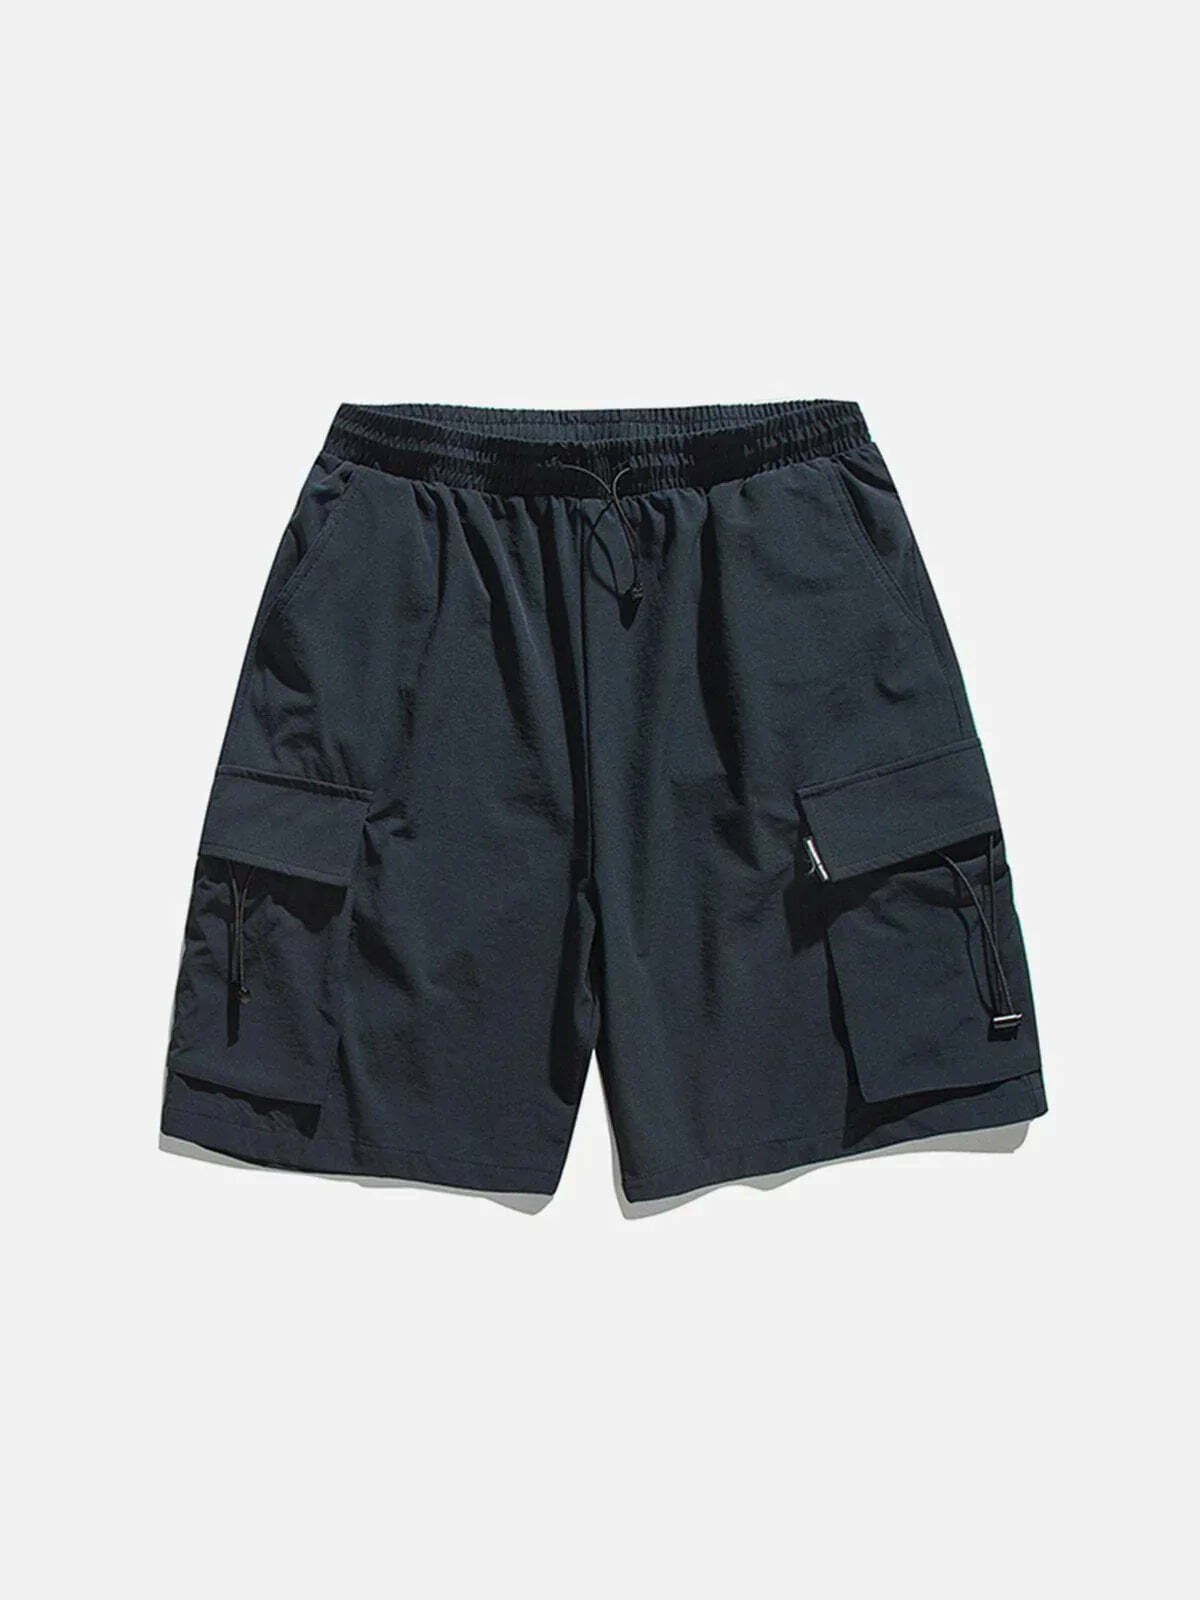 sleek loose fit pocket shorts urban streetwear essential 7502